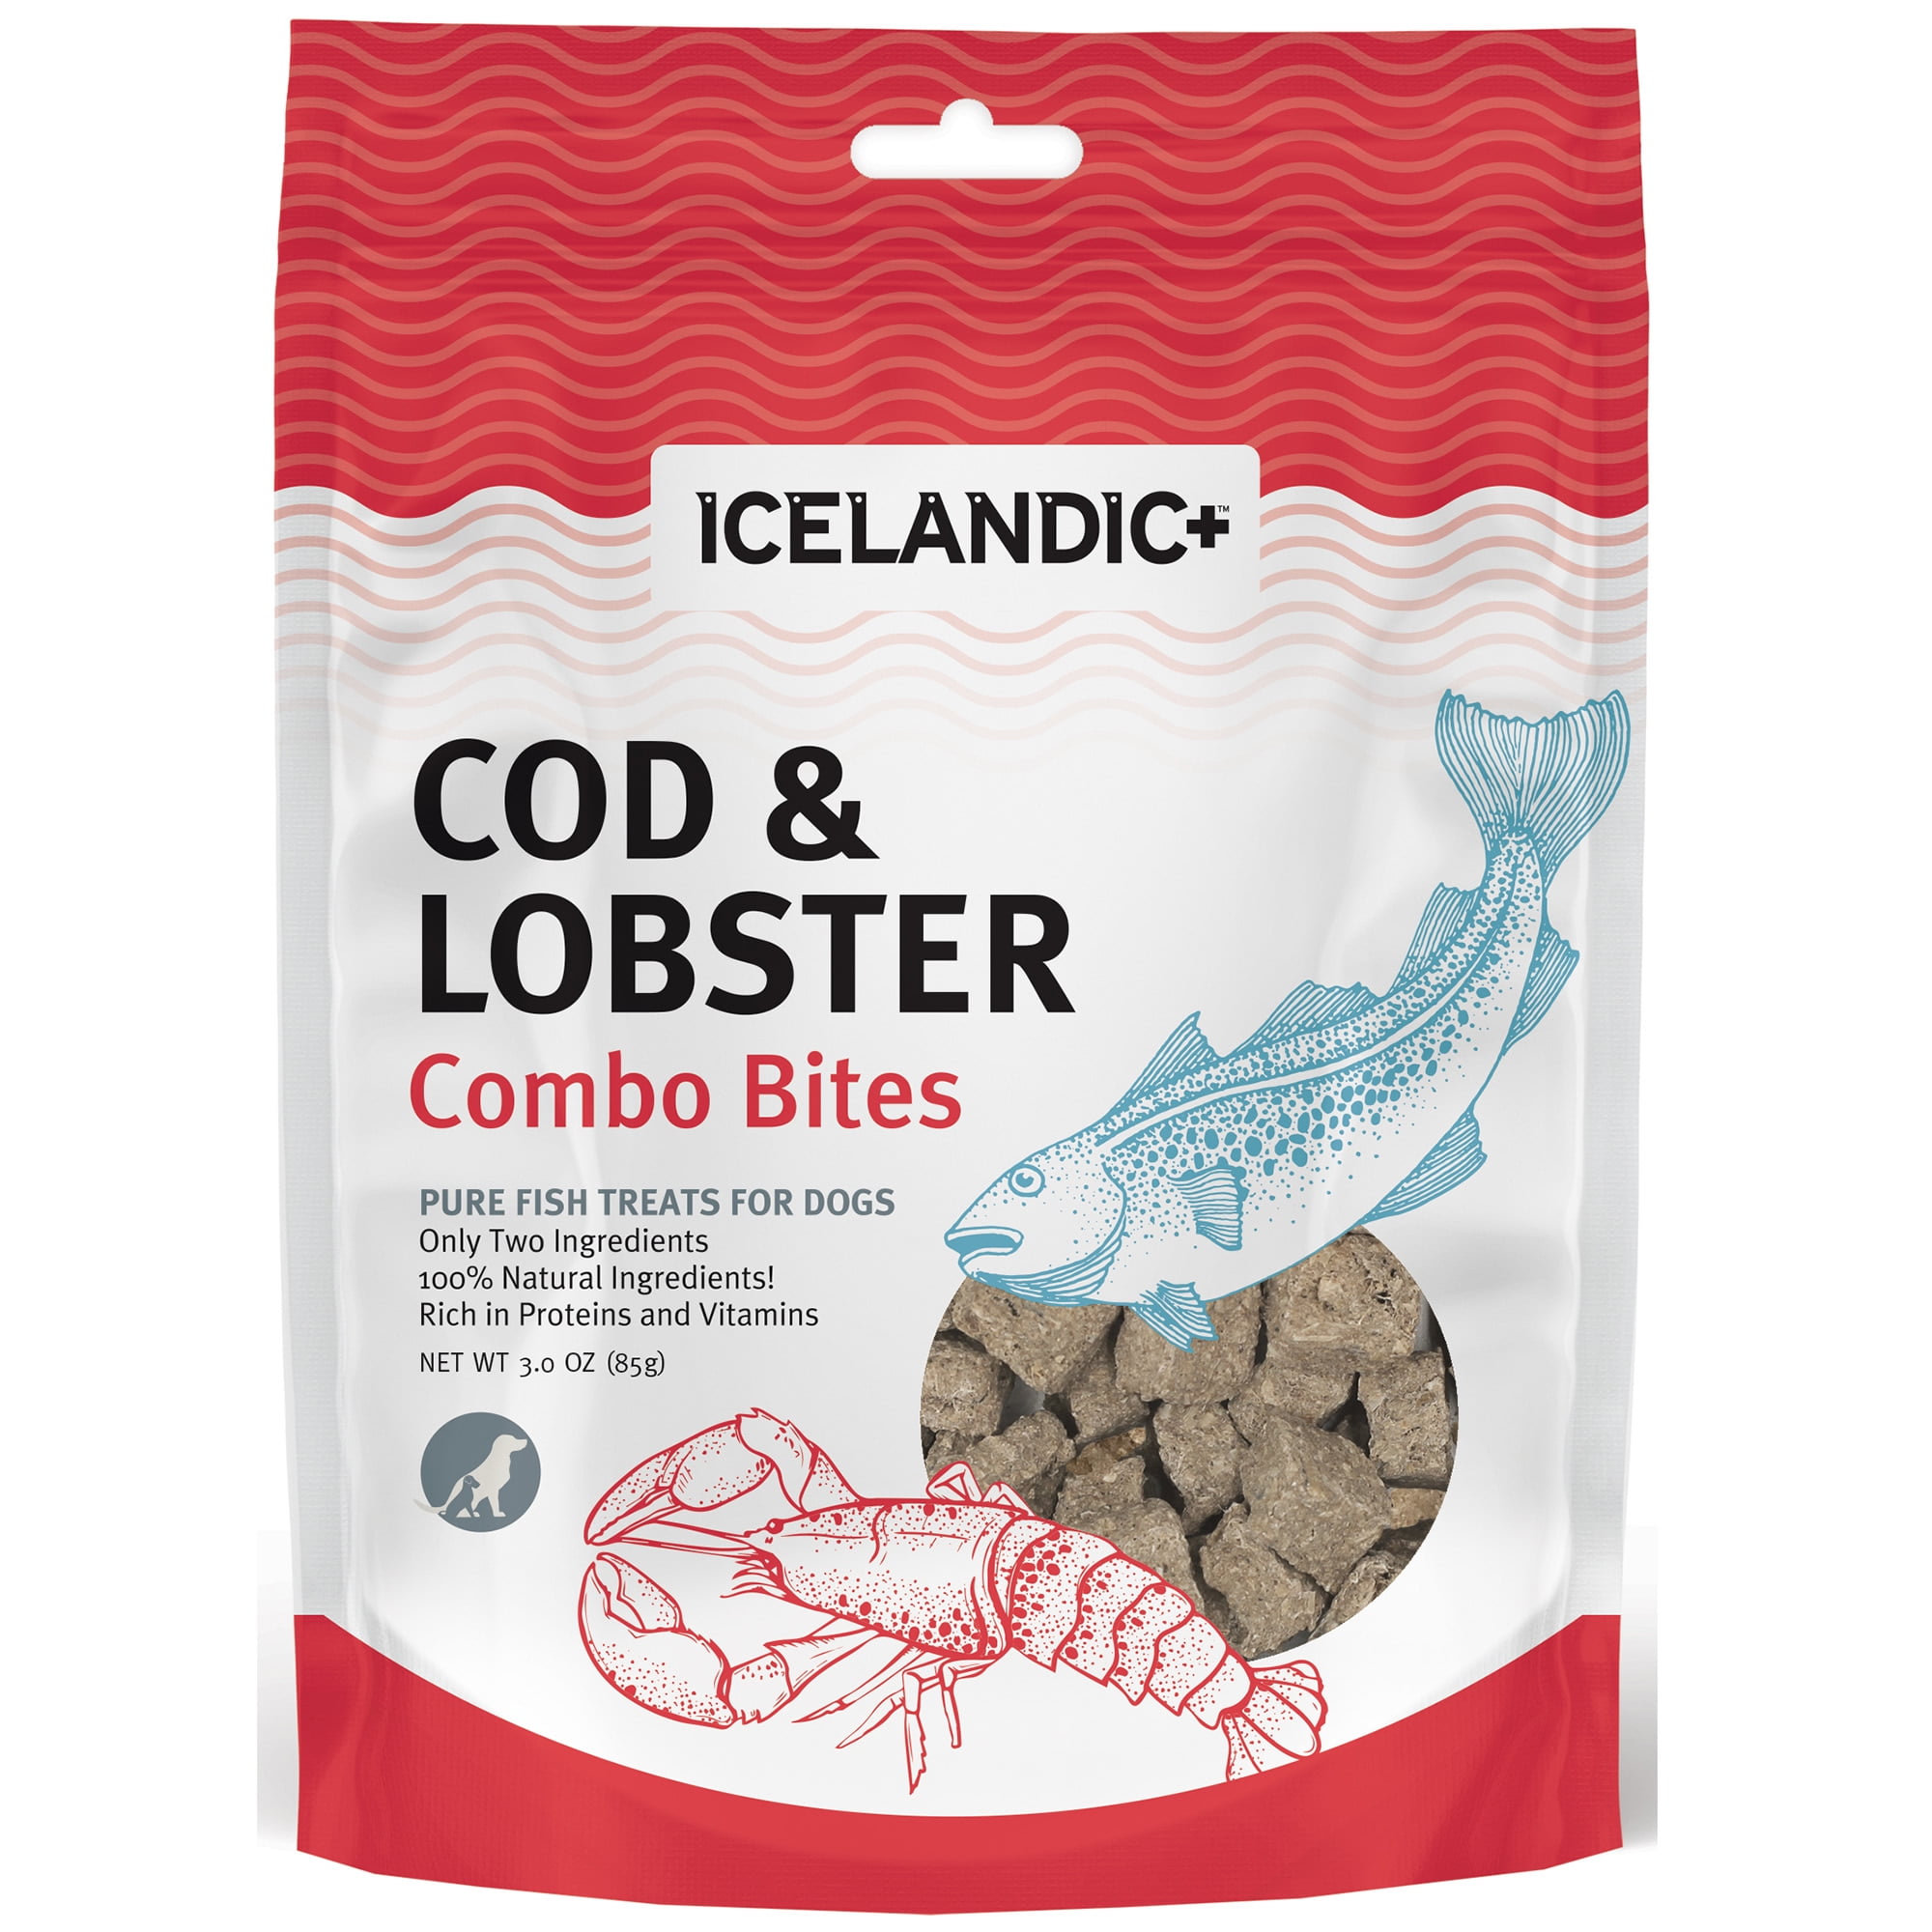 Ih82913 3.25 Oz Cod & Lobster Combo Bites Fish Dog Treat Bag